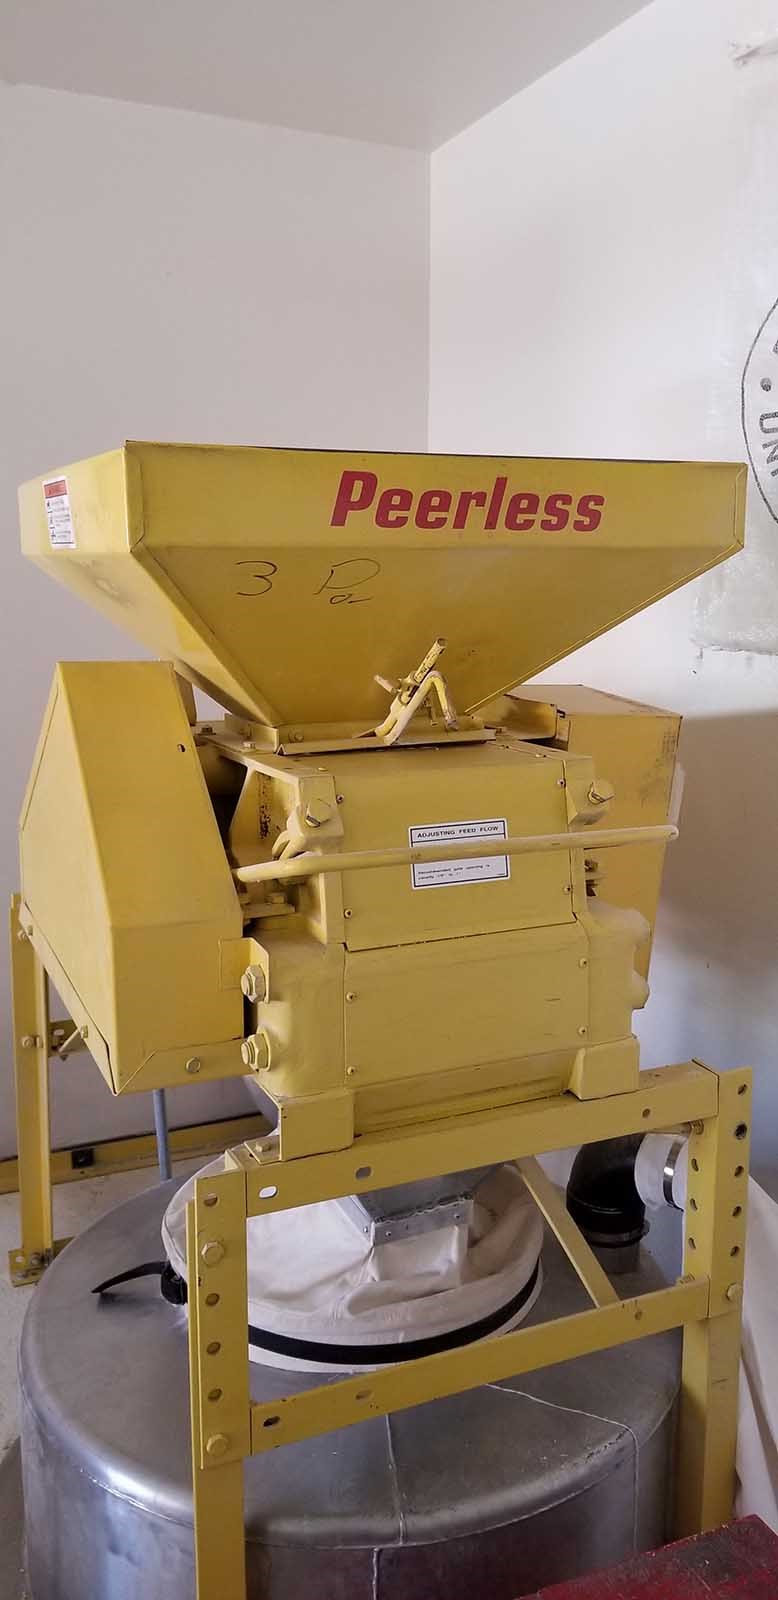 Peerless two-roller mill